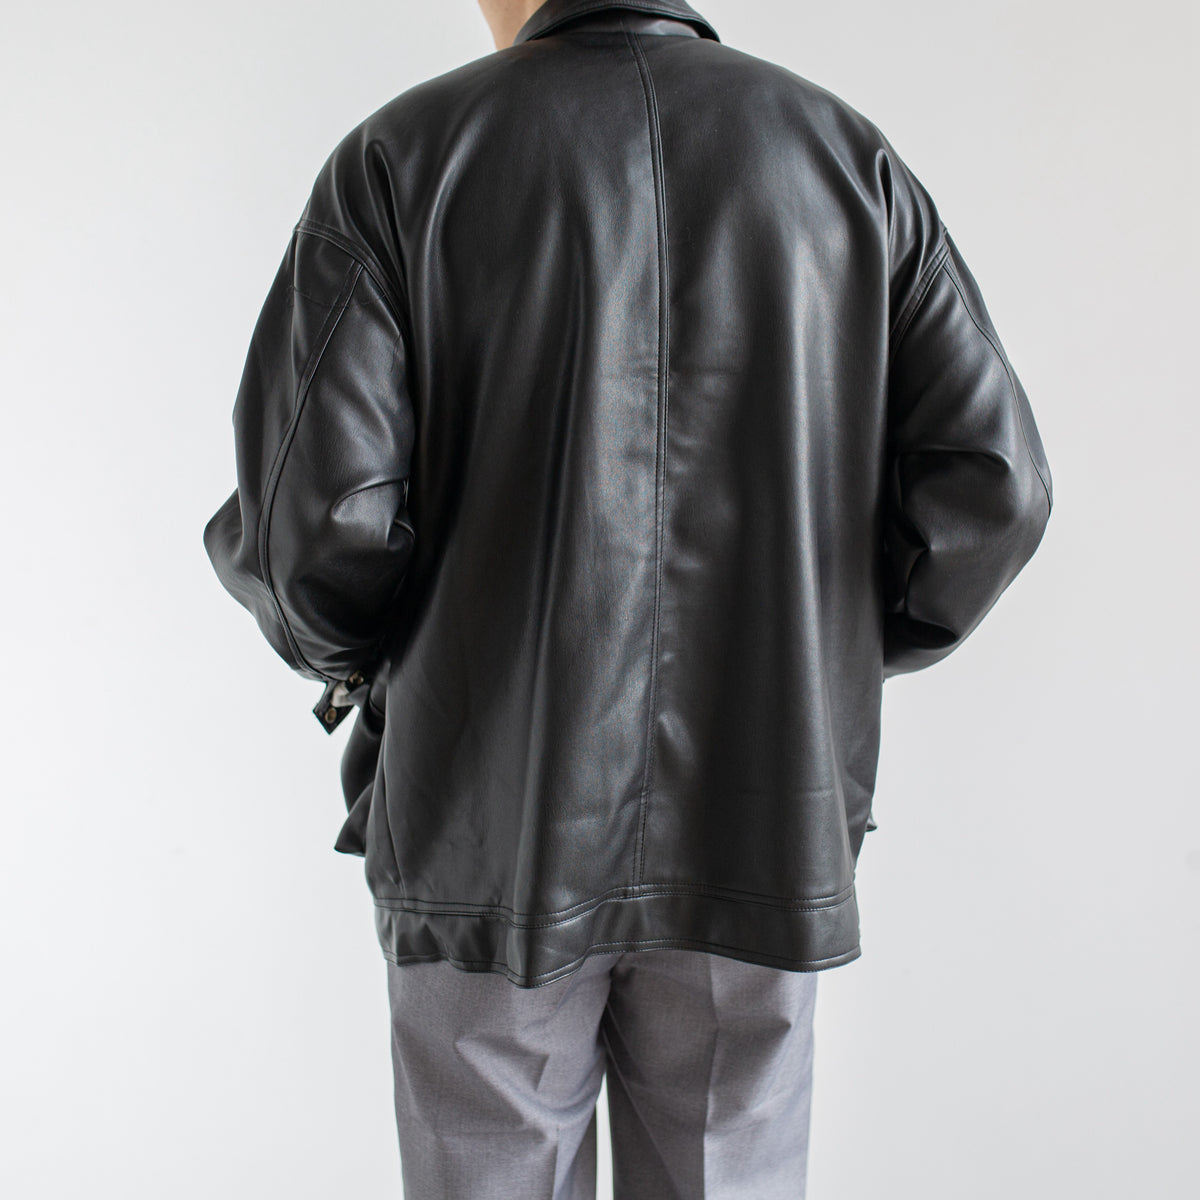 Black Chic Leather Men's Trendy Jacket Jacket